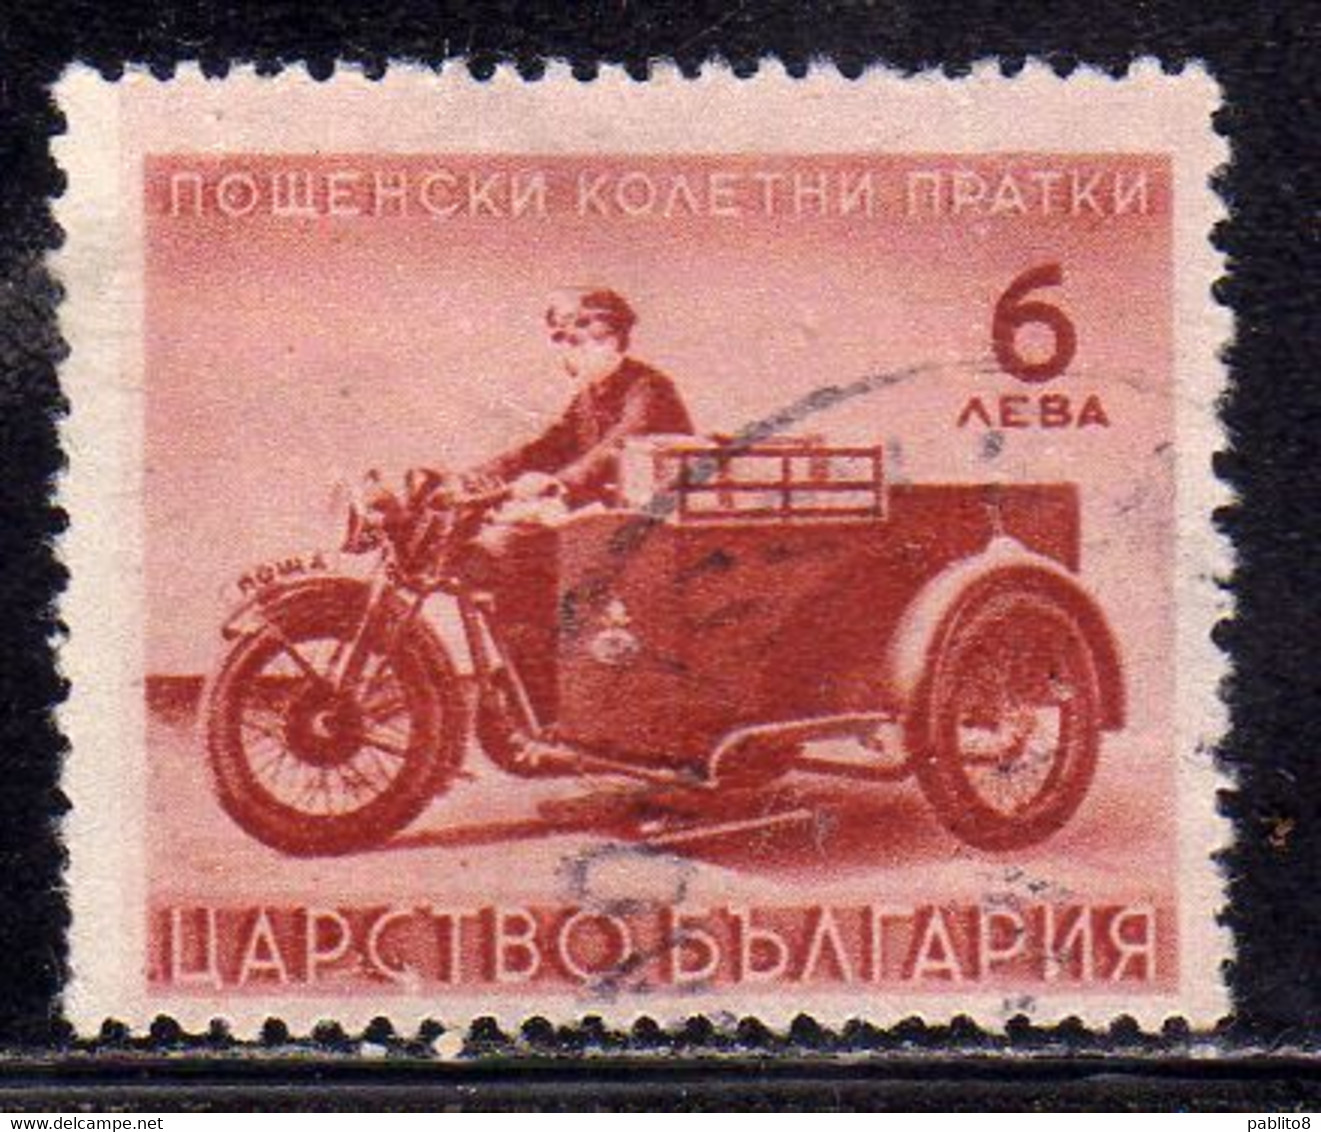 BULGARIA BULGARIE BULGARIEN 1942 PARCEL POST STAMPS PACCHI POSTALI MOTORCYCLE 6L USATO USED OBLITERE' - Francobolli Di Servizio